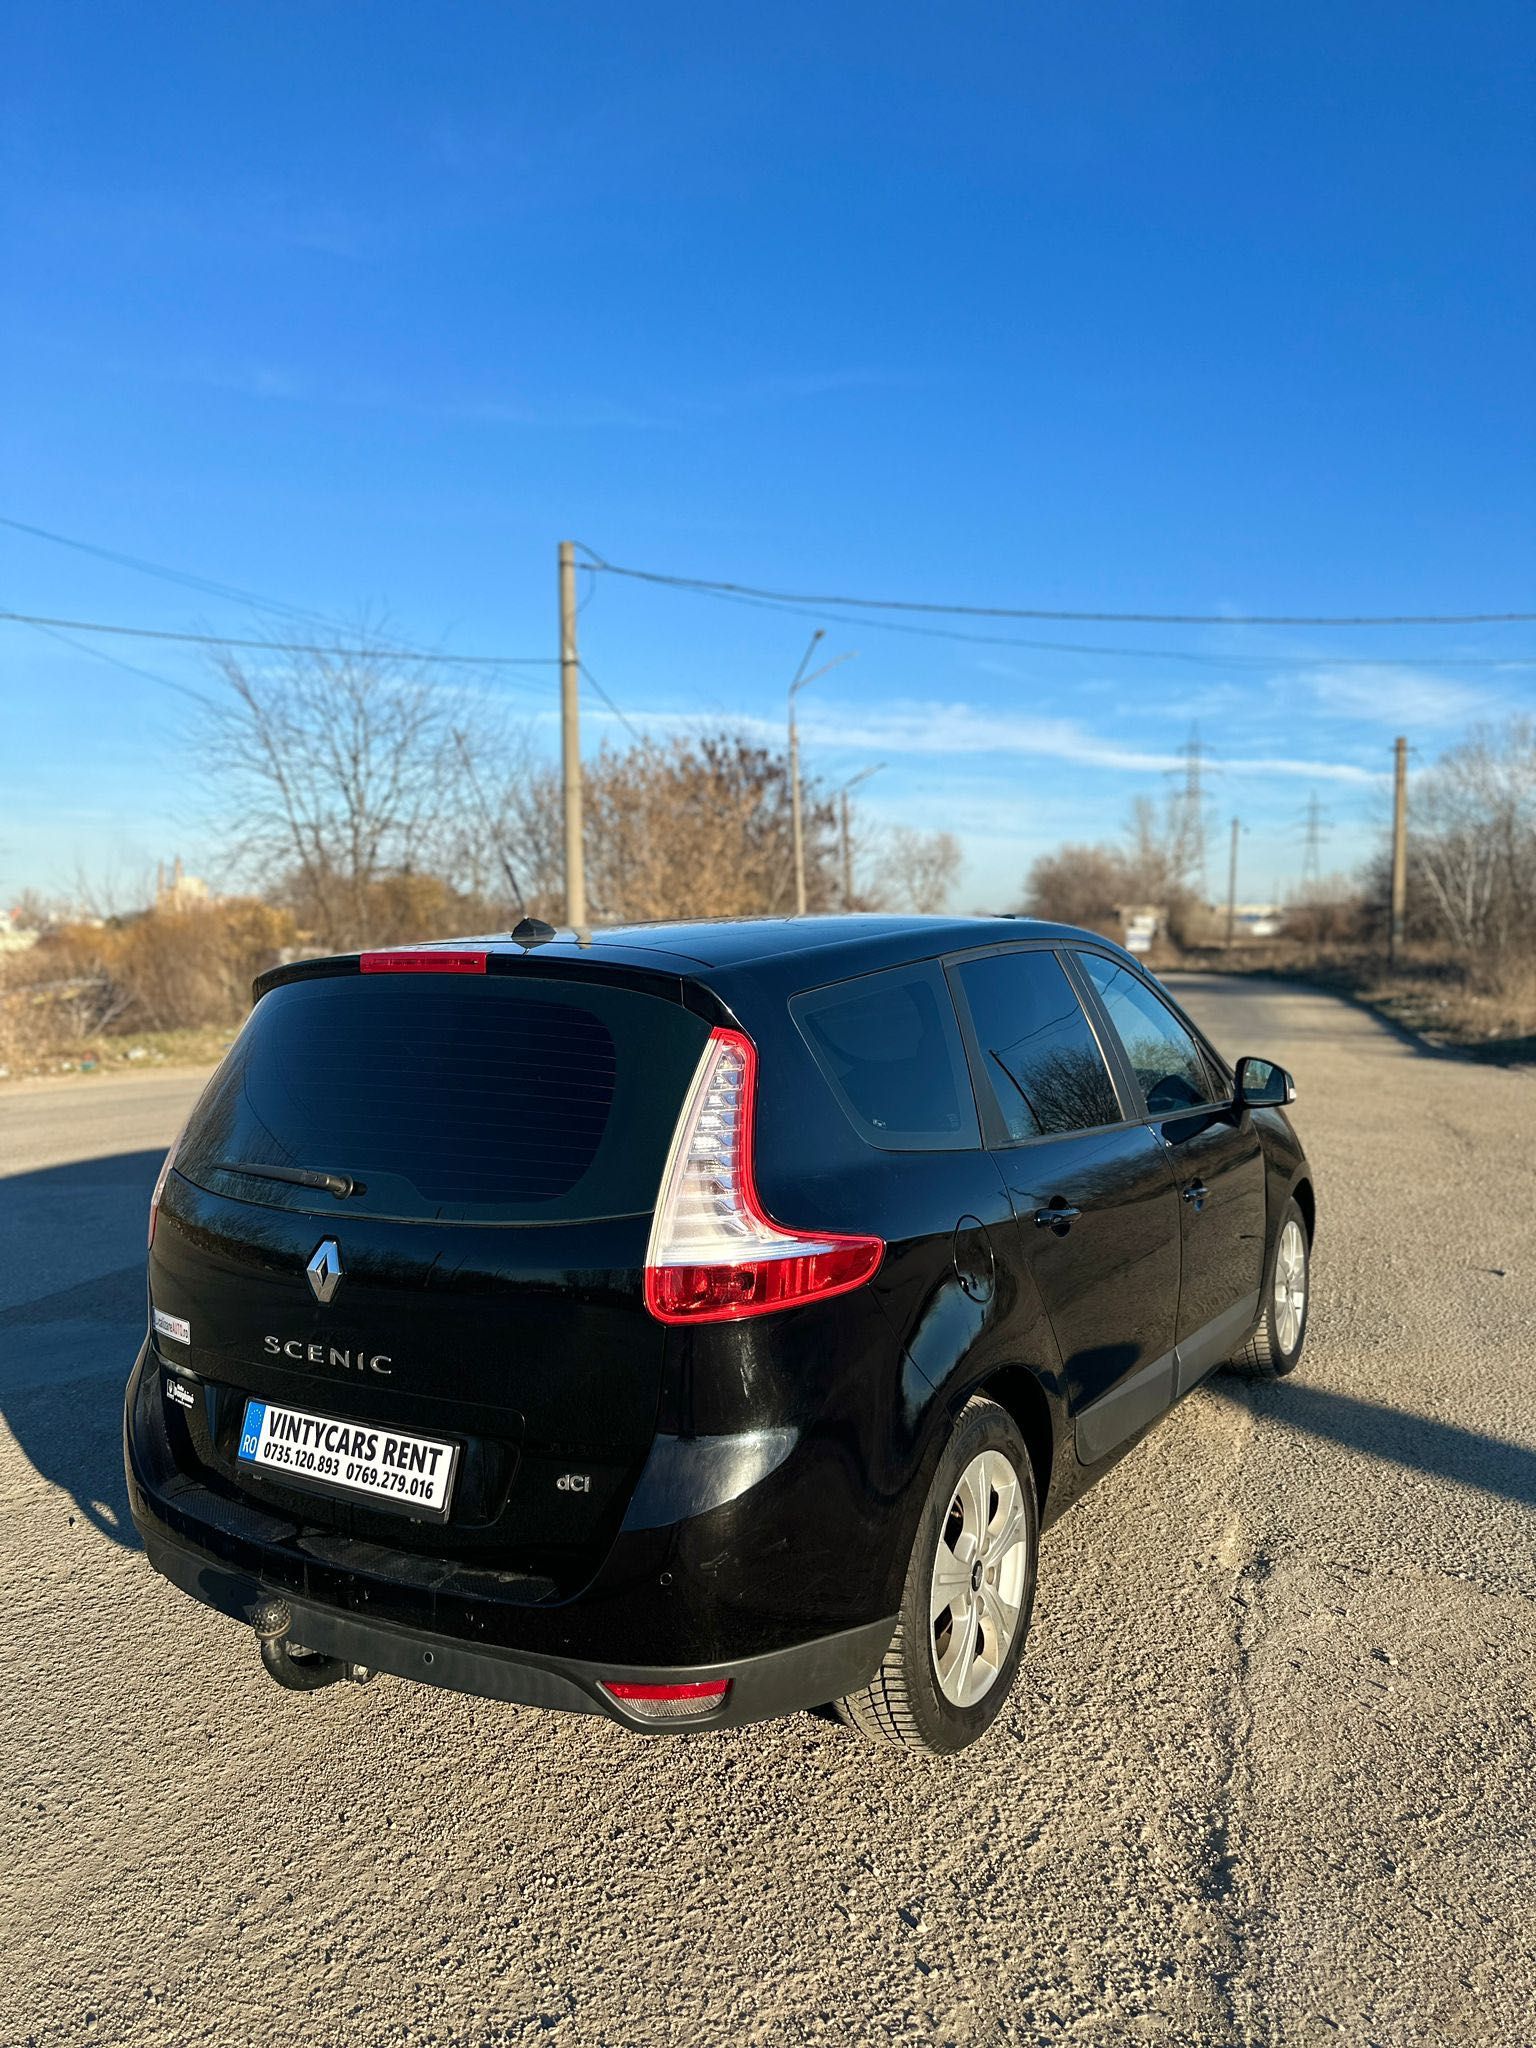 Inchirieri Auto VintyCars Rent Giurgiu-Bucuresti